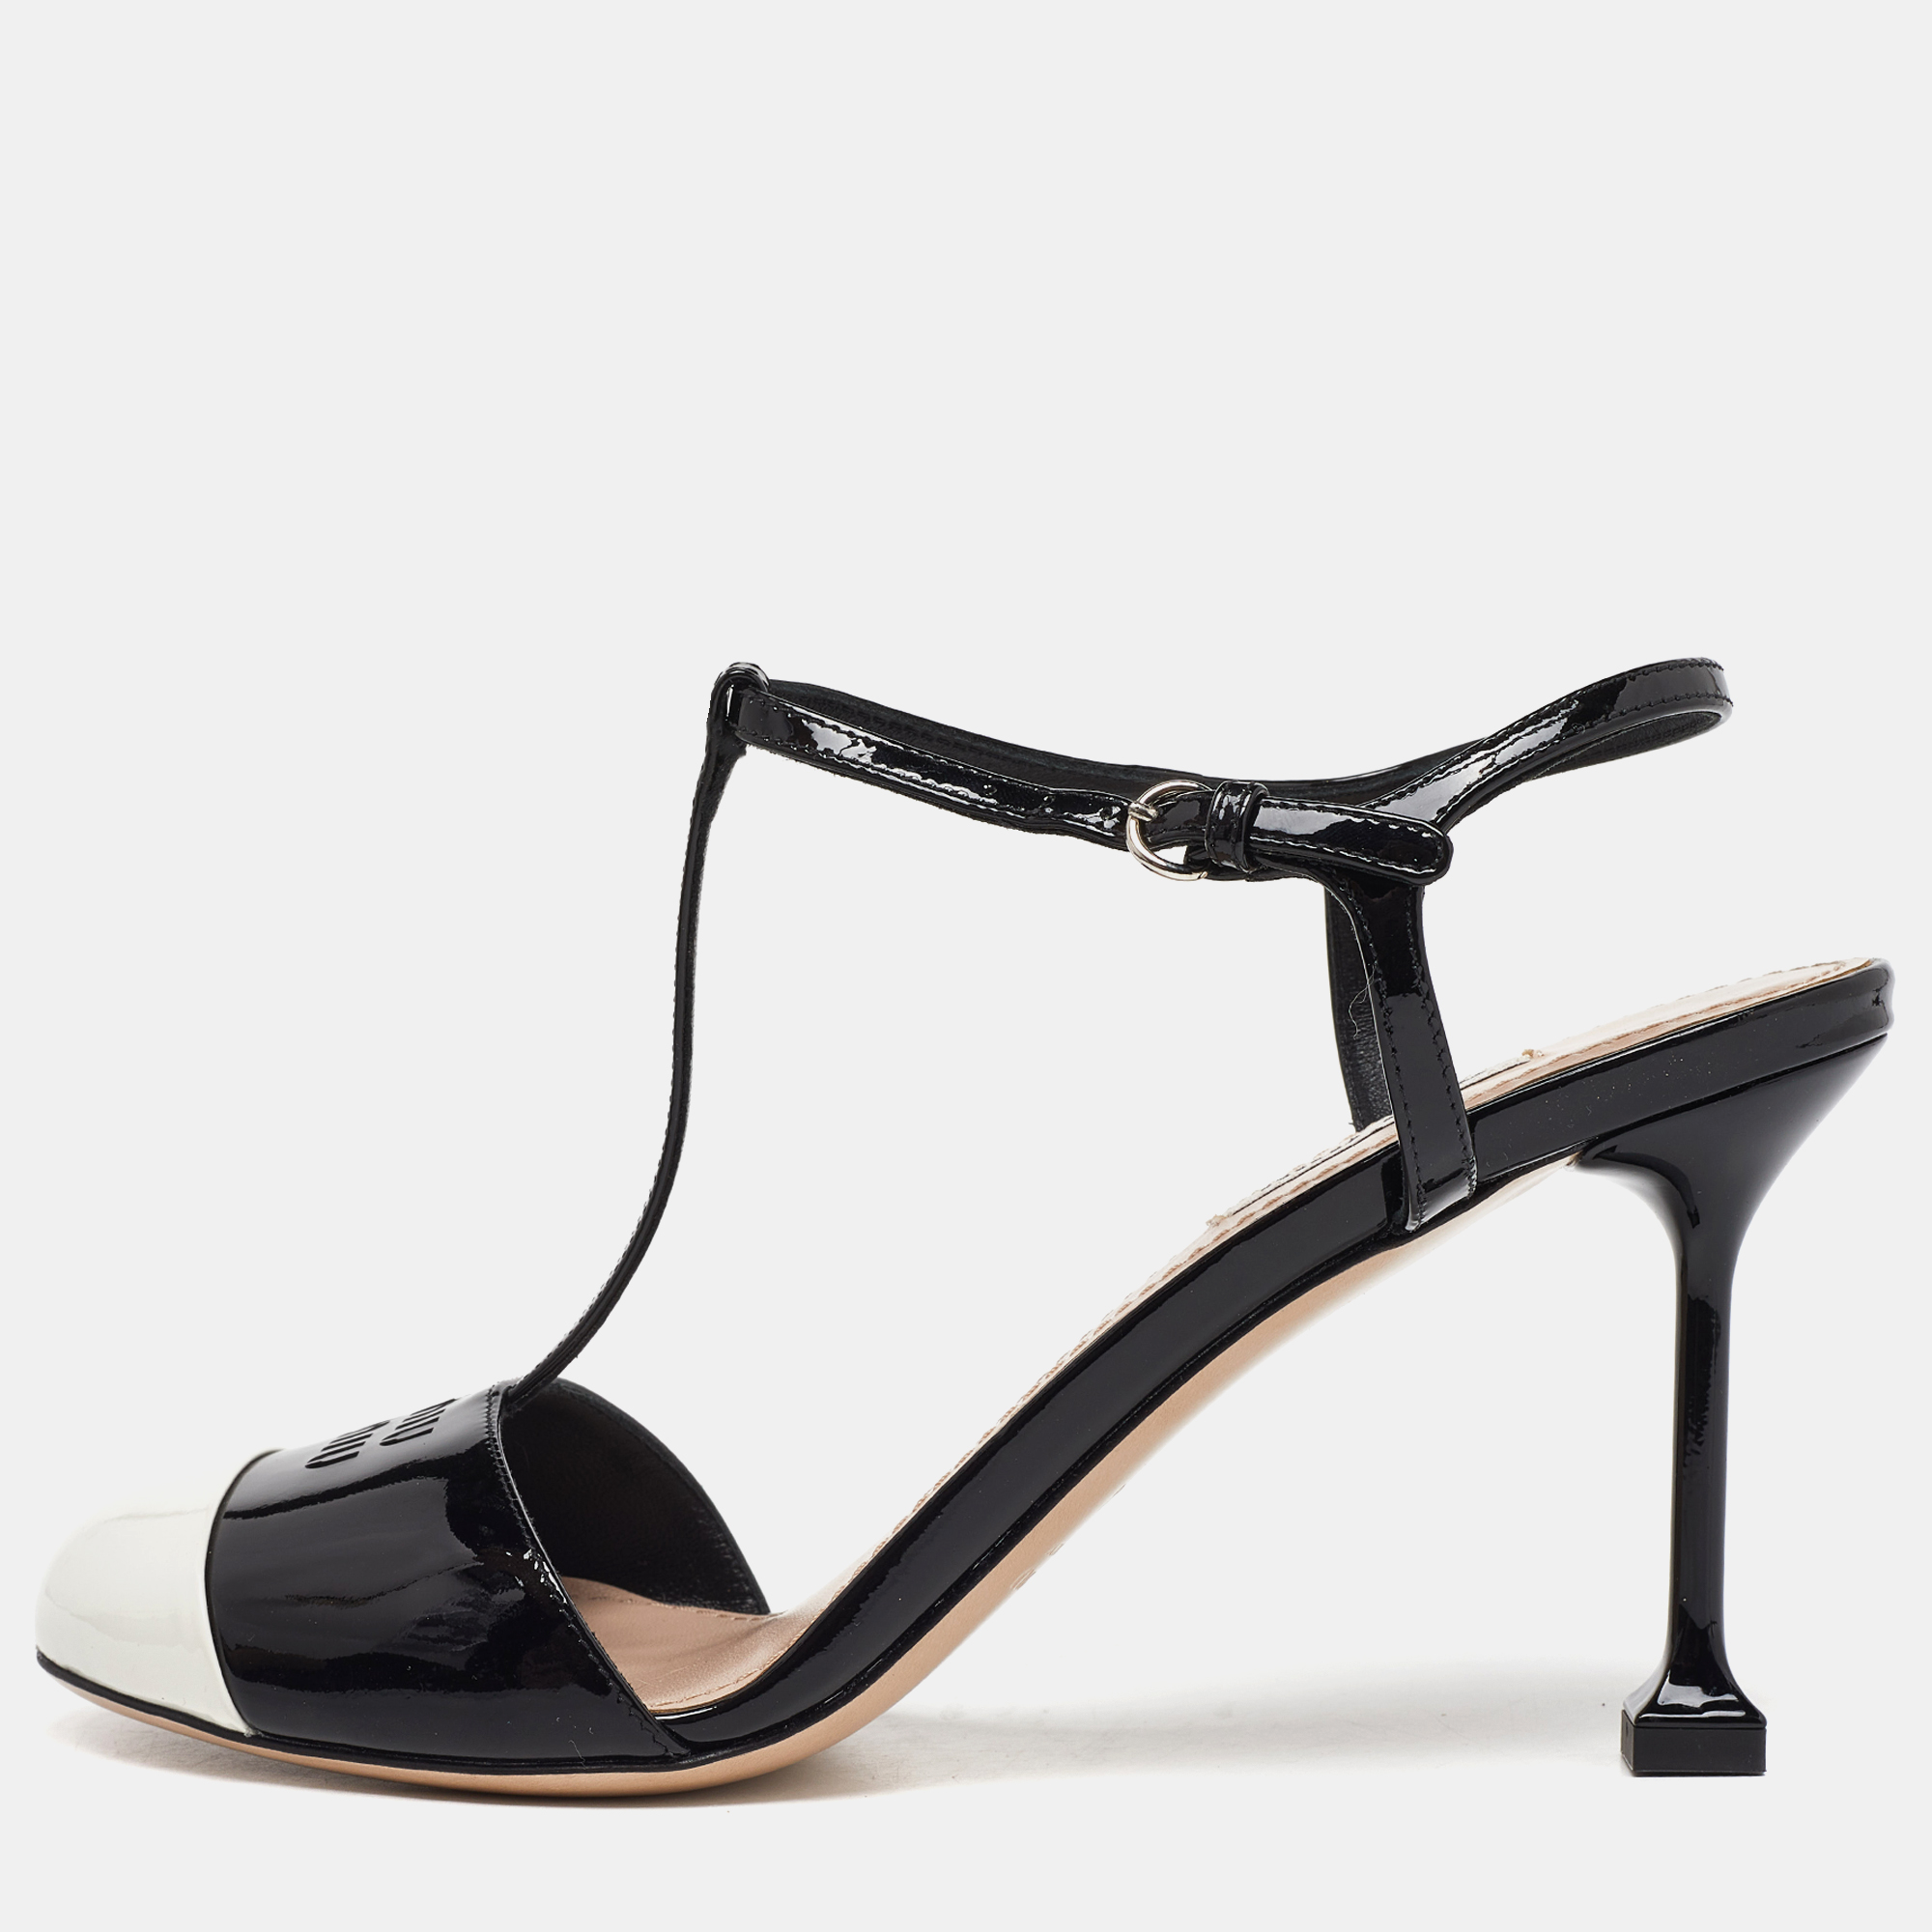 Miu miu black/white patent leather ankle strap sandals size 38.5